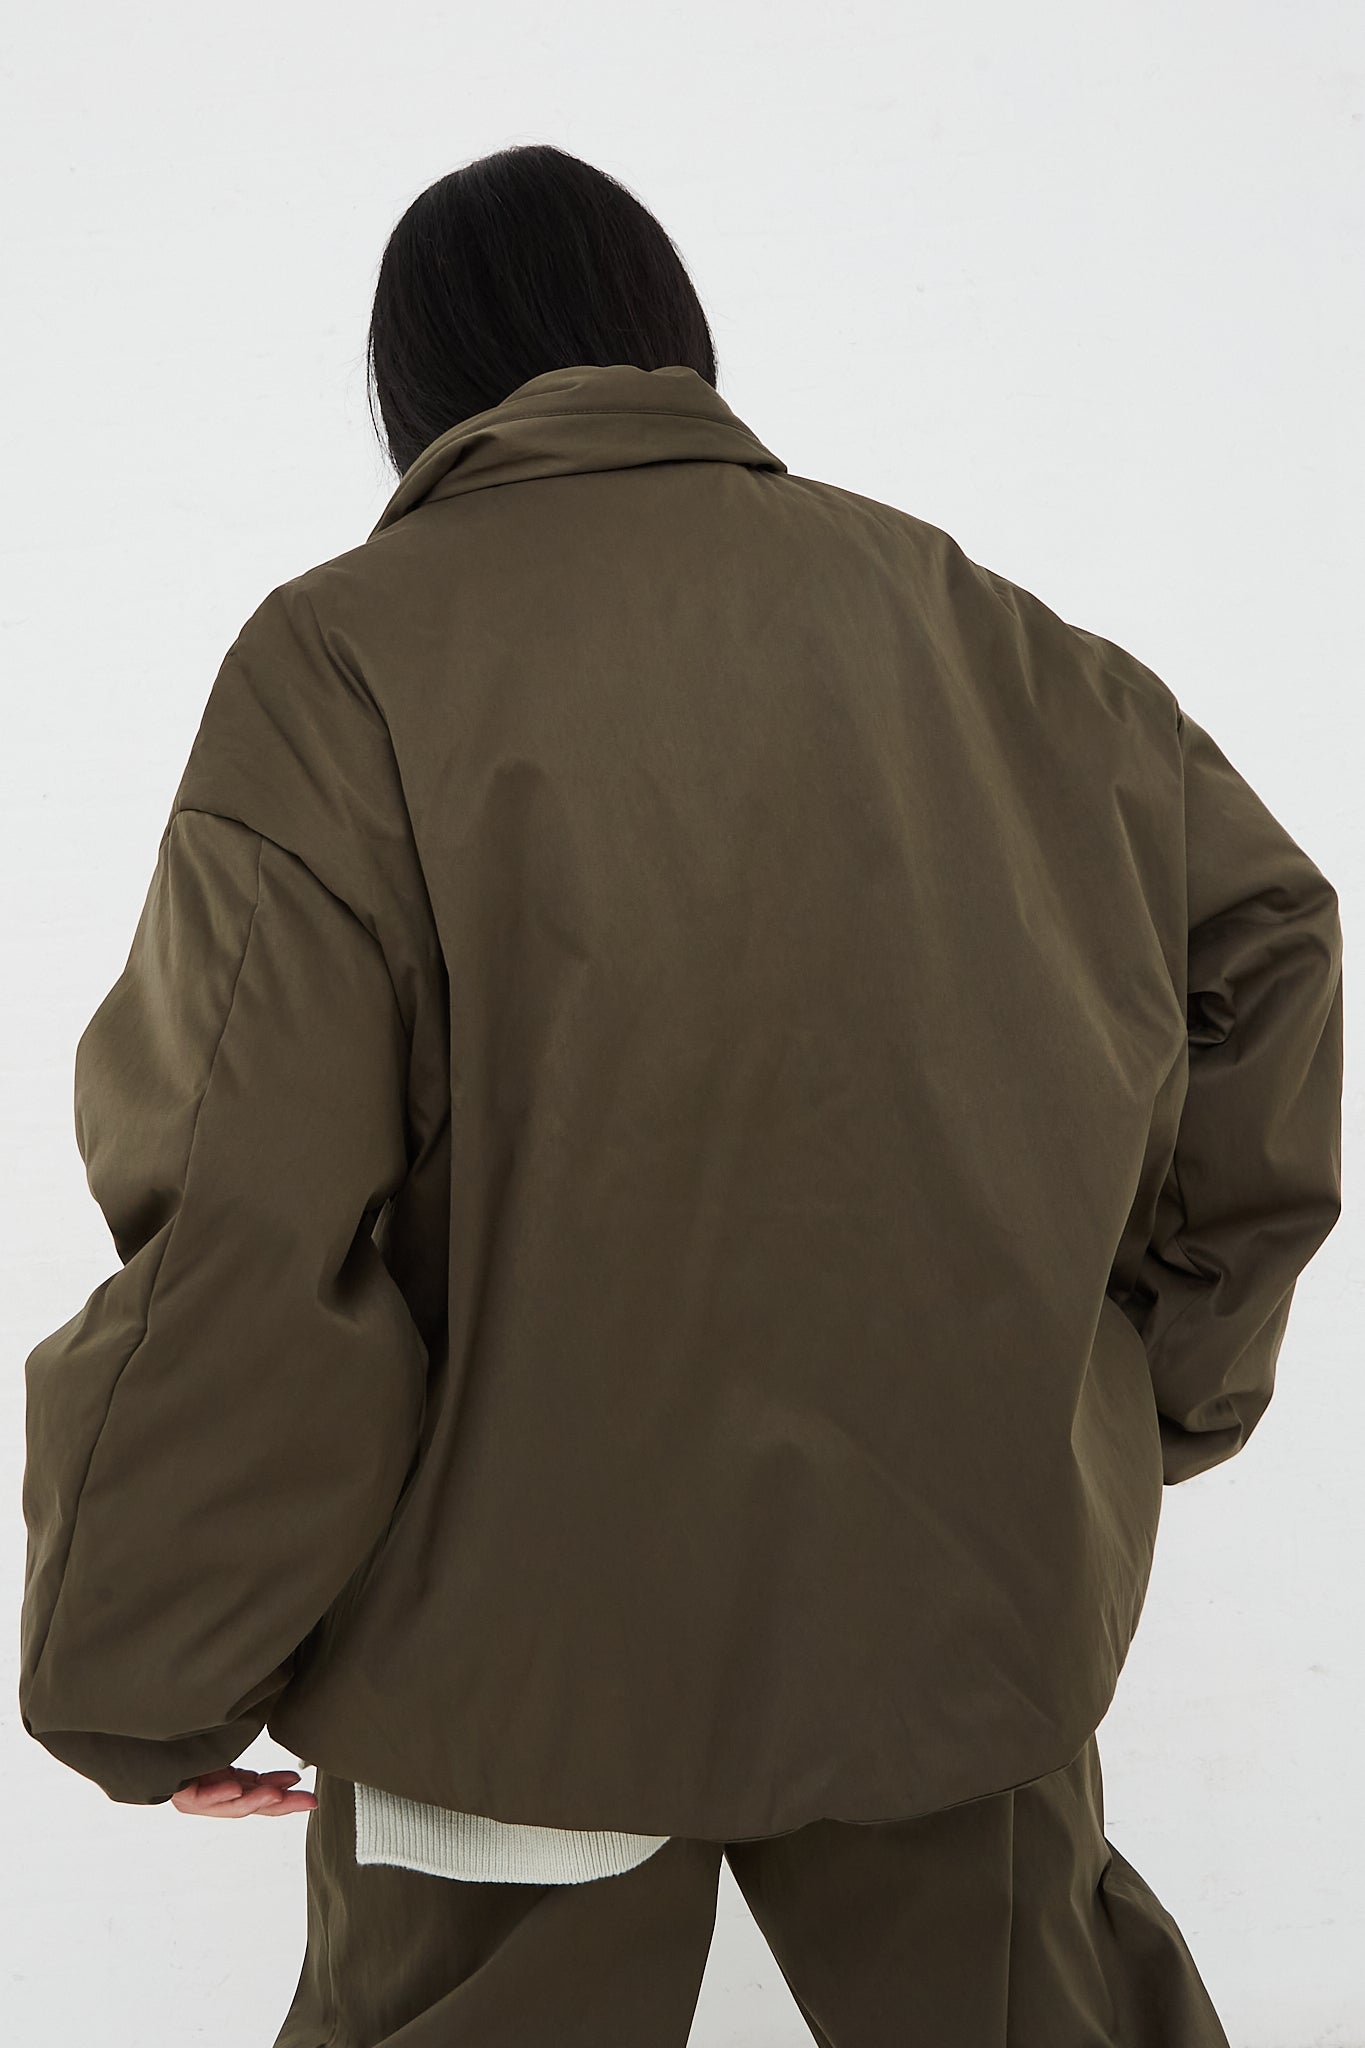 STUDIO NICHOLSON - Vaner Short Padded Jacket in Army Green | Oroboro Store